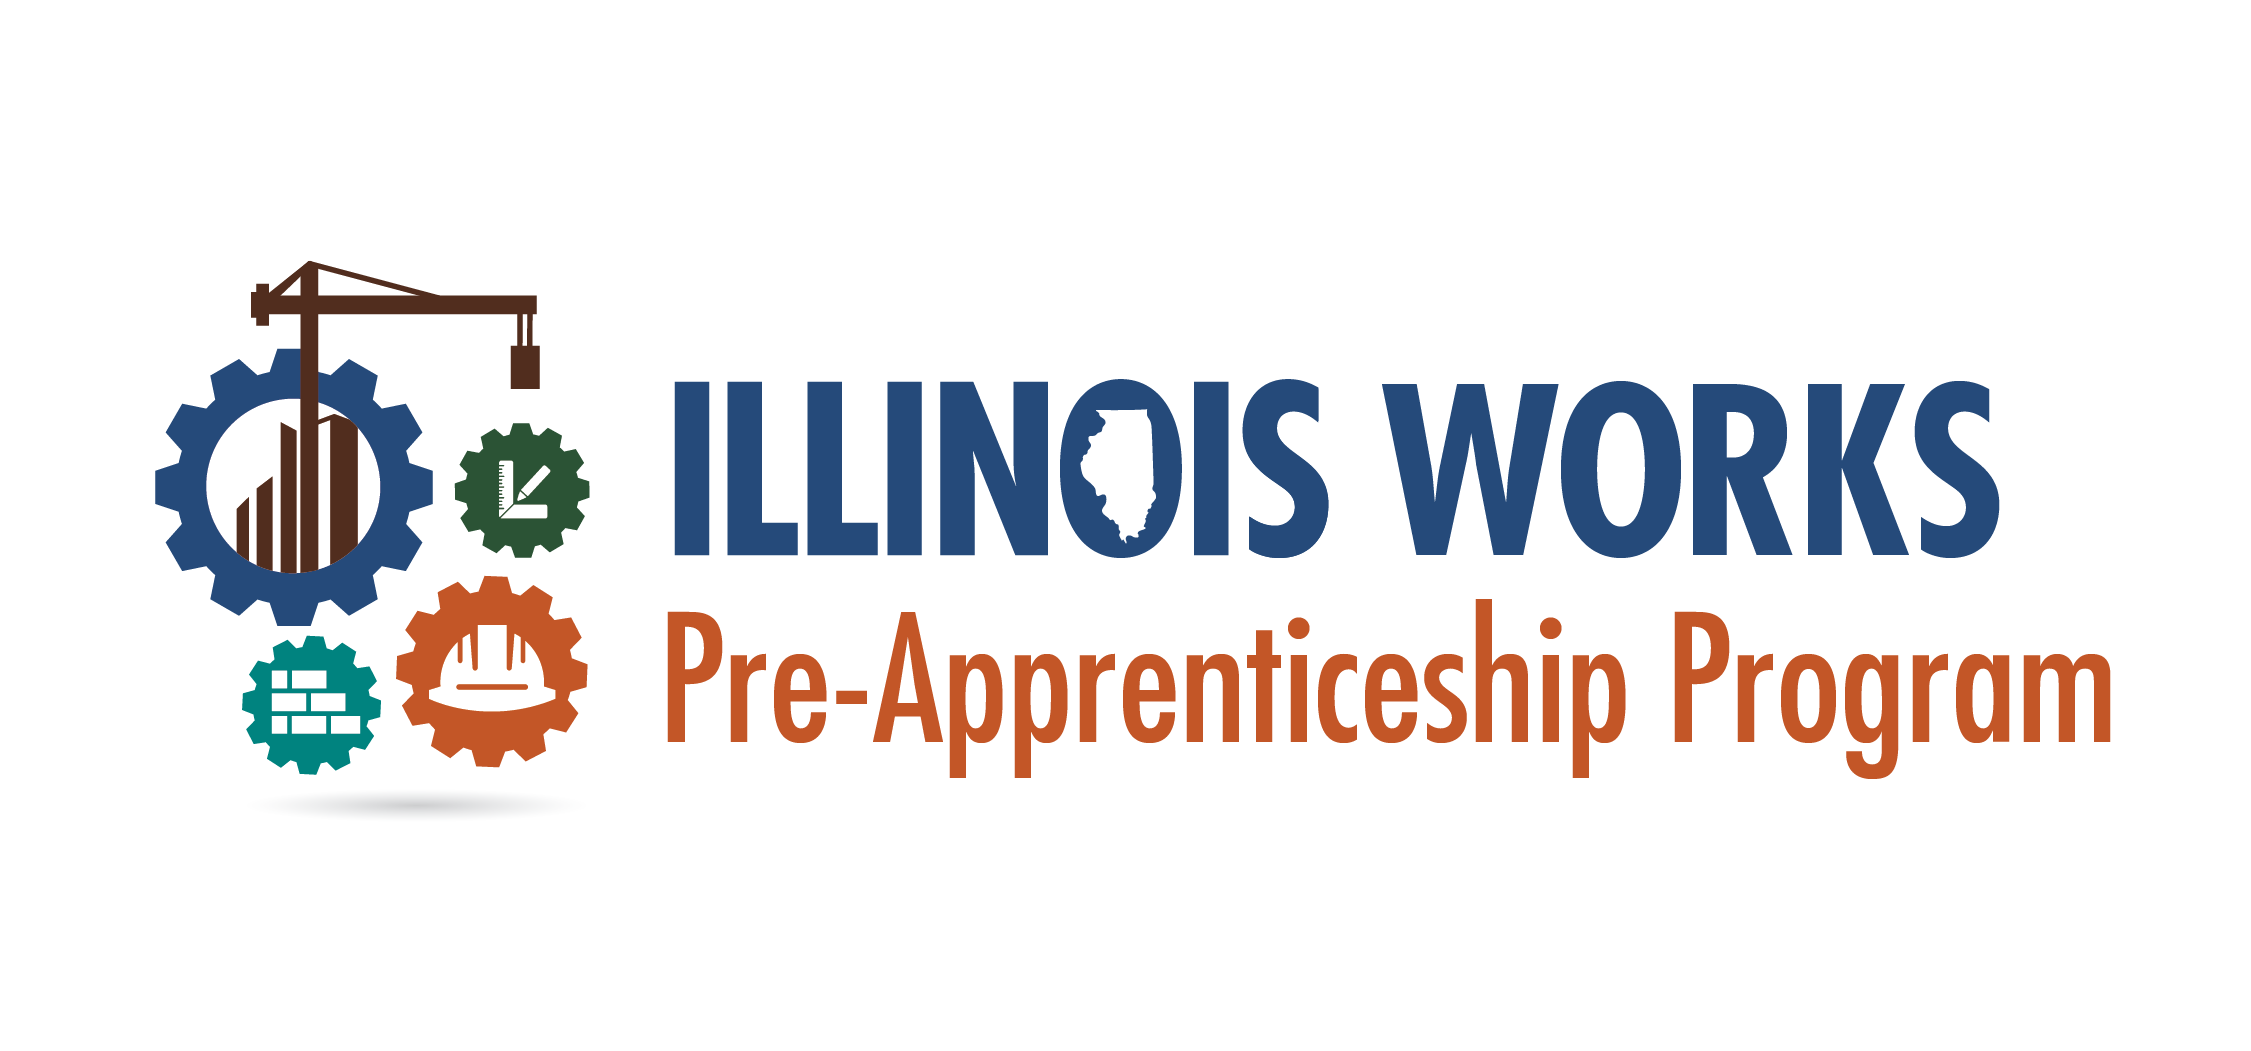 Illinois Works Pre-Apprenticeship Program logo